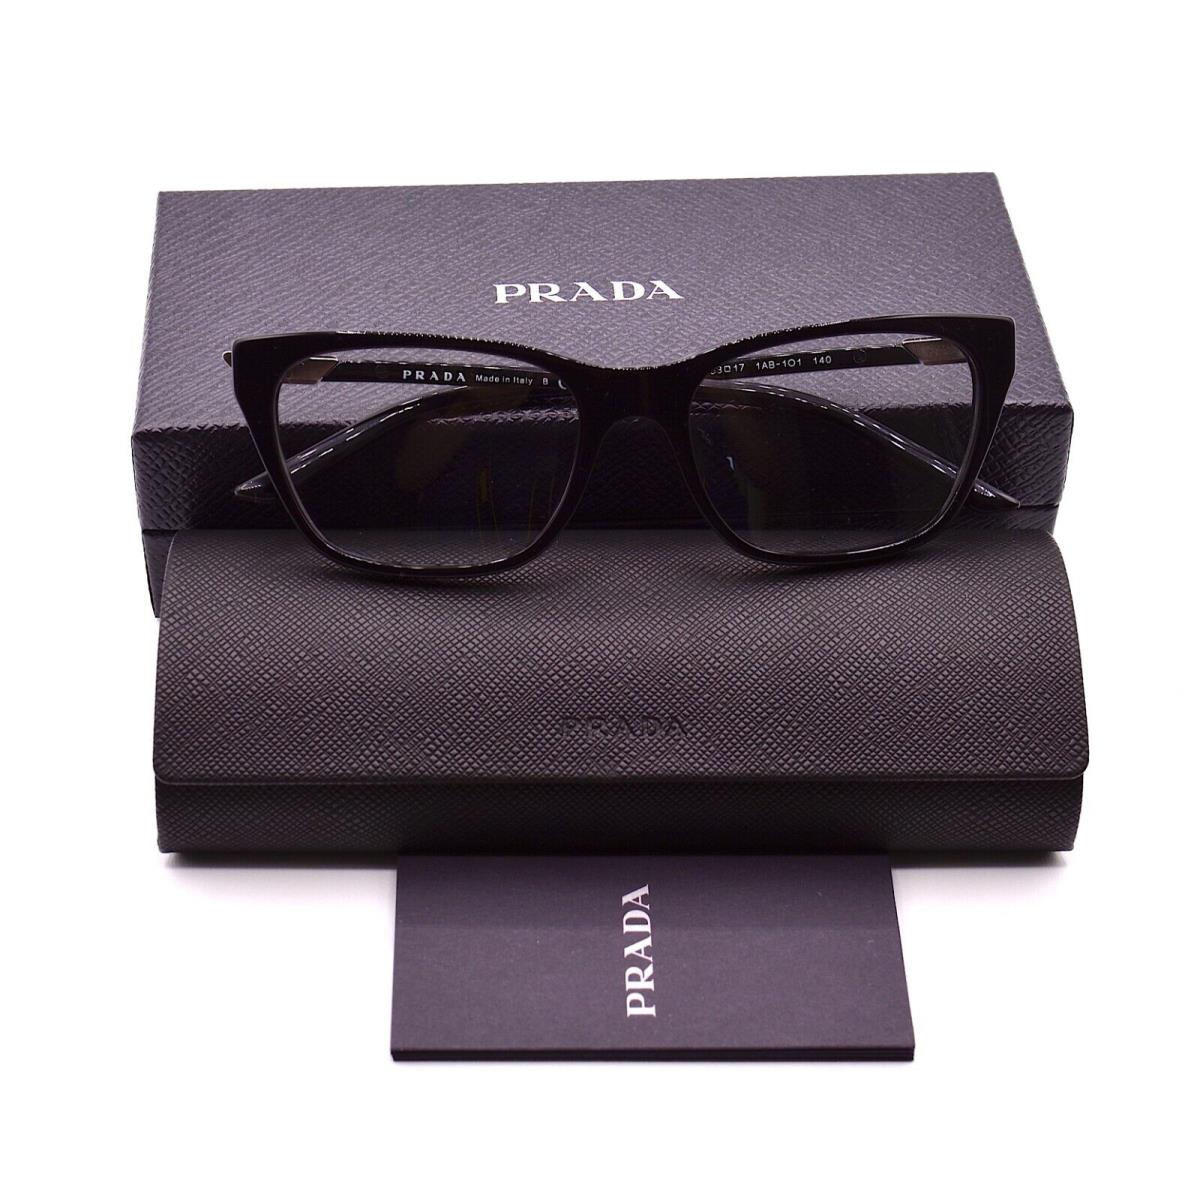 Prada eyeglasses  - Frame: Black 8